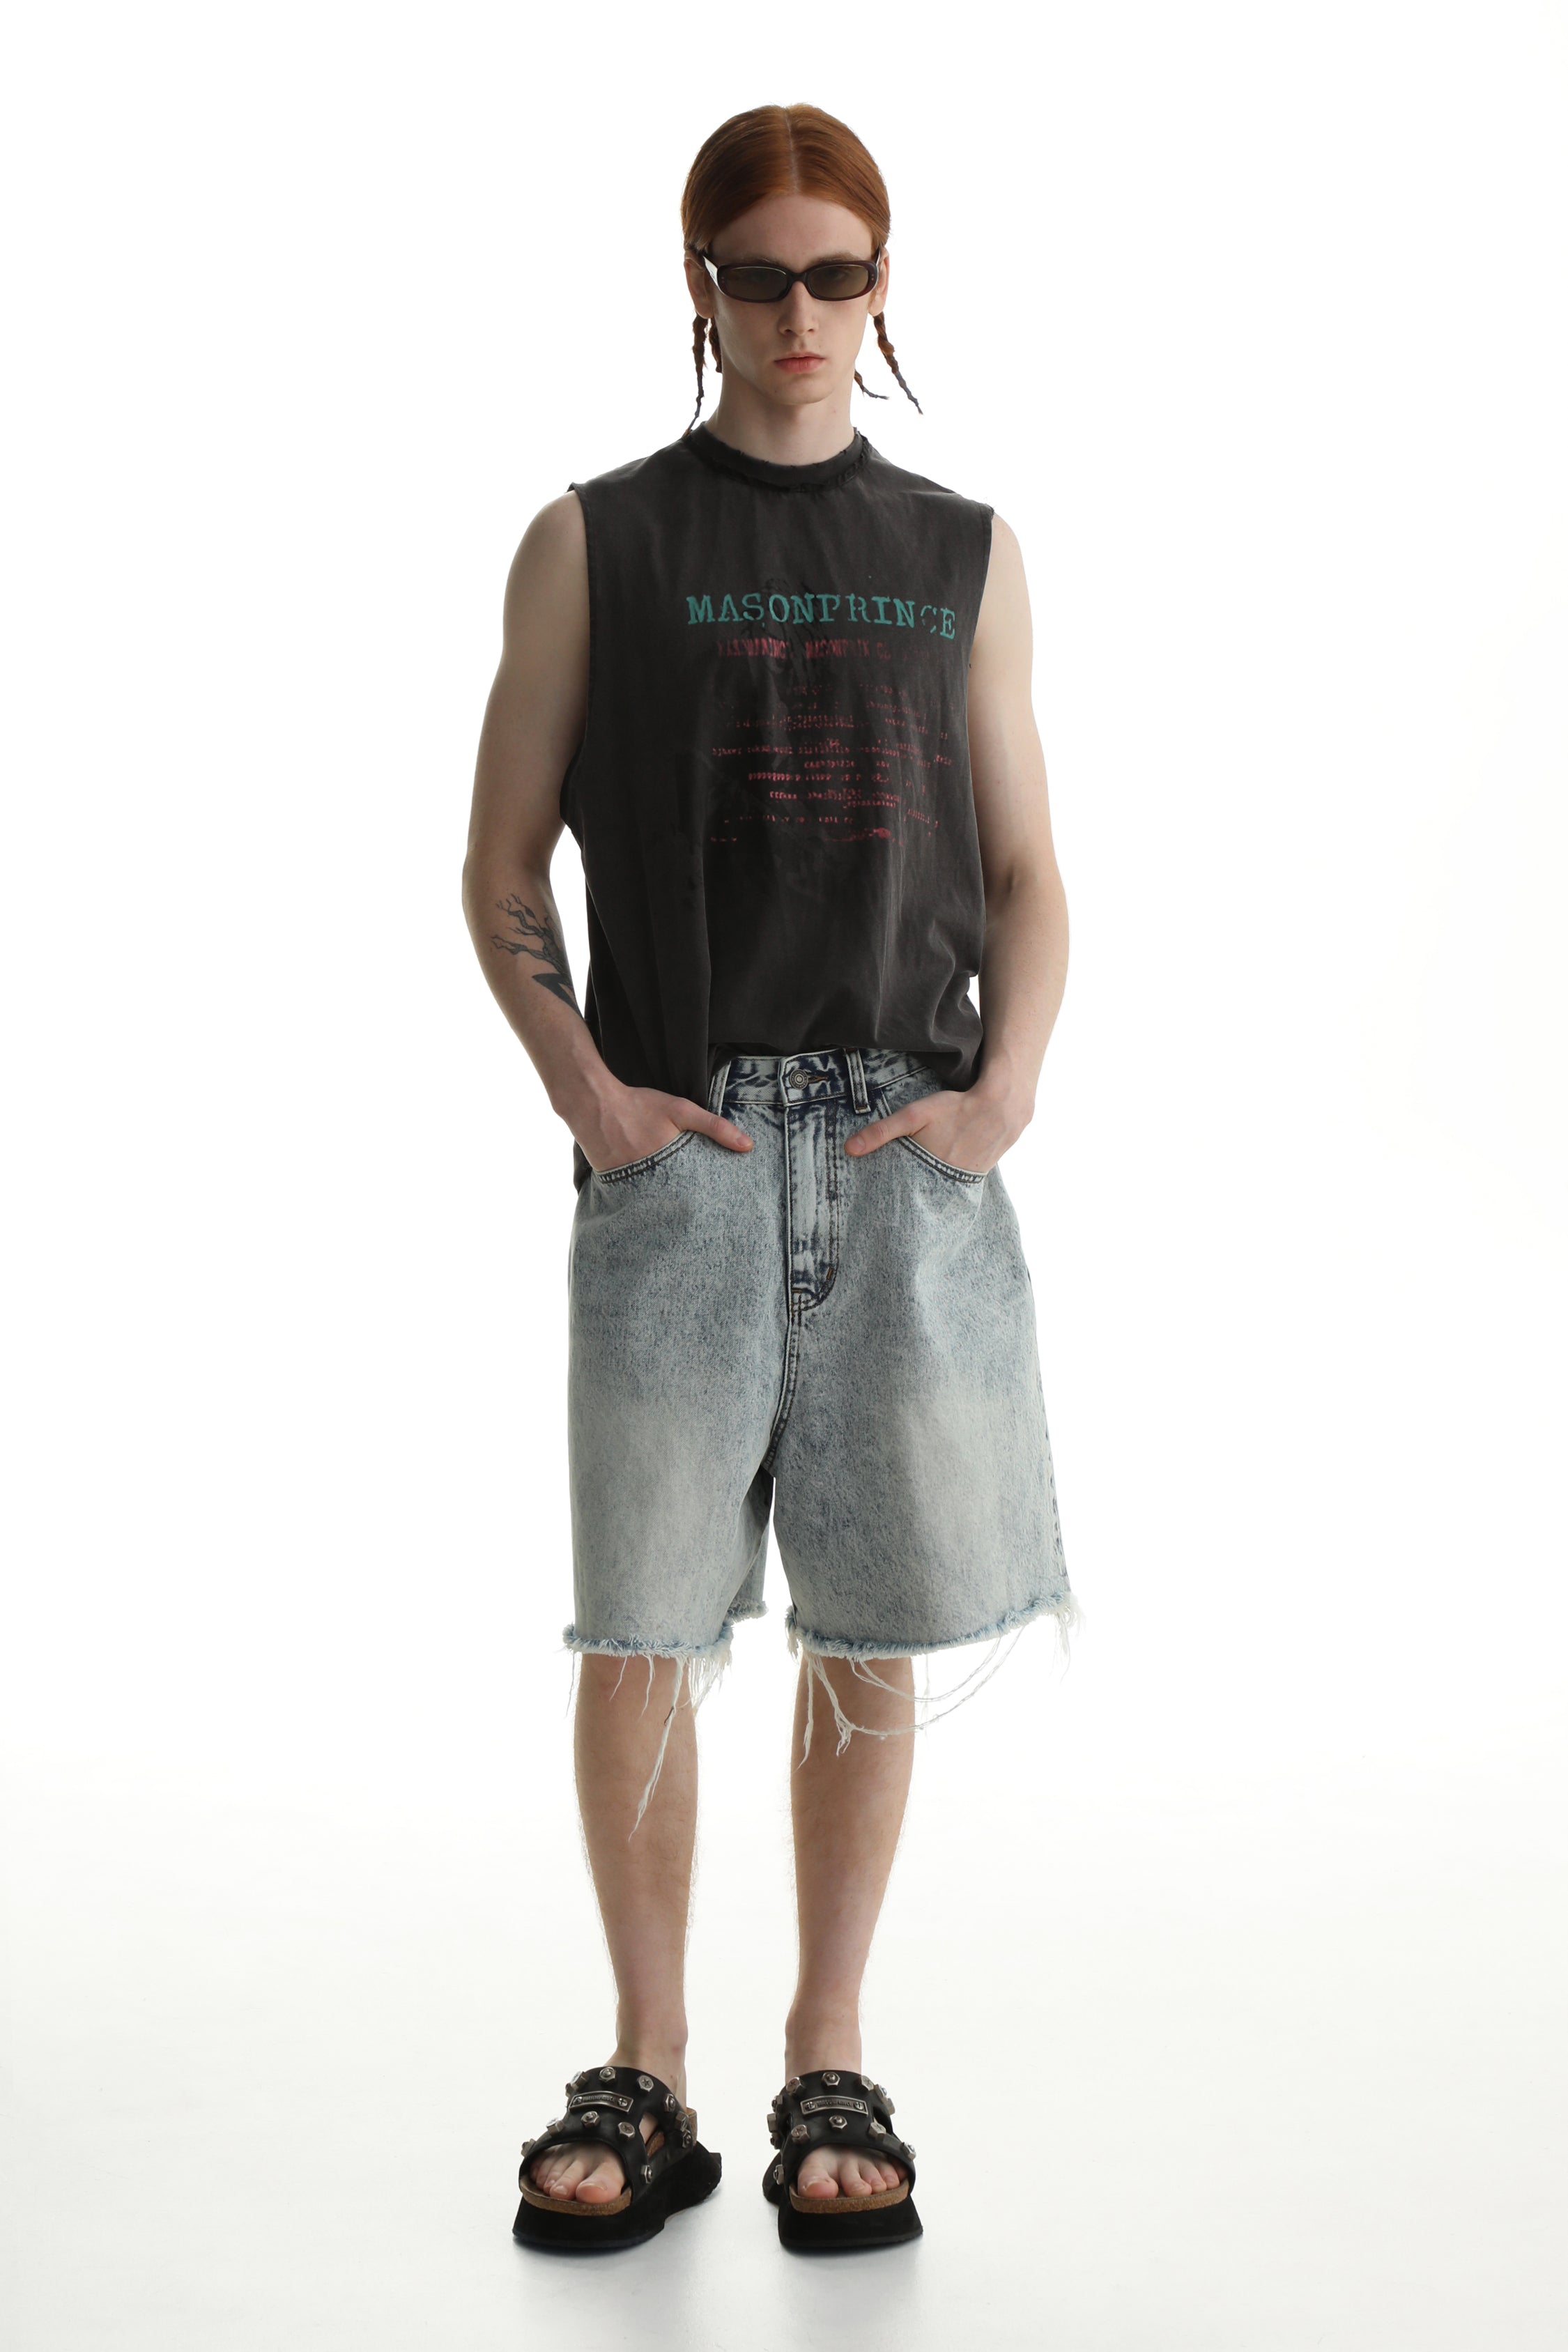 Denim Shorts & Jeans Set with Faded Raw Edges - chiclara